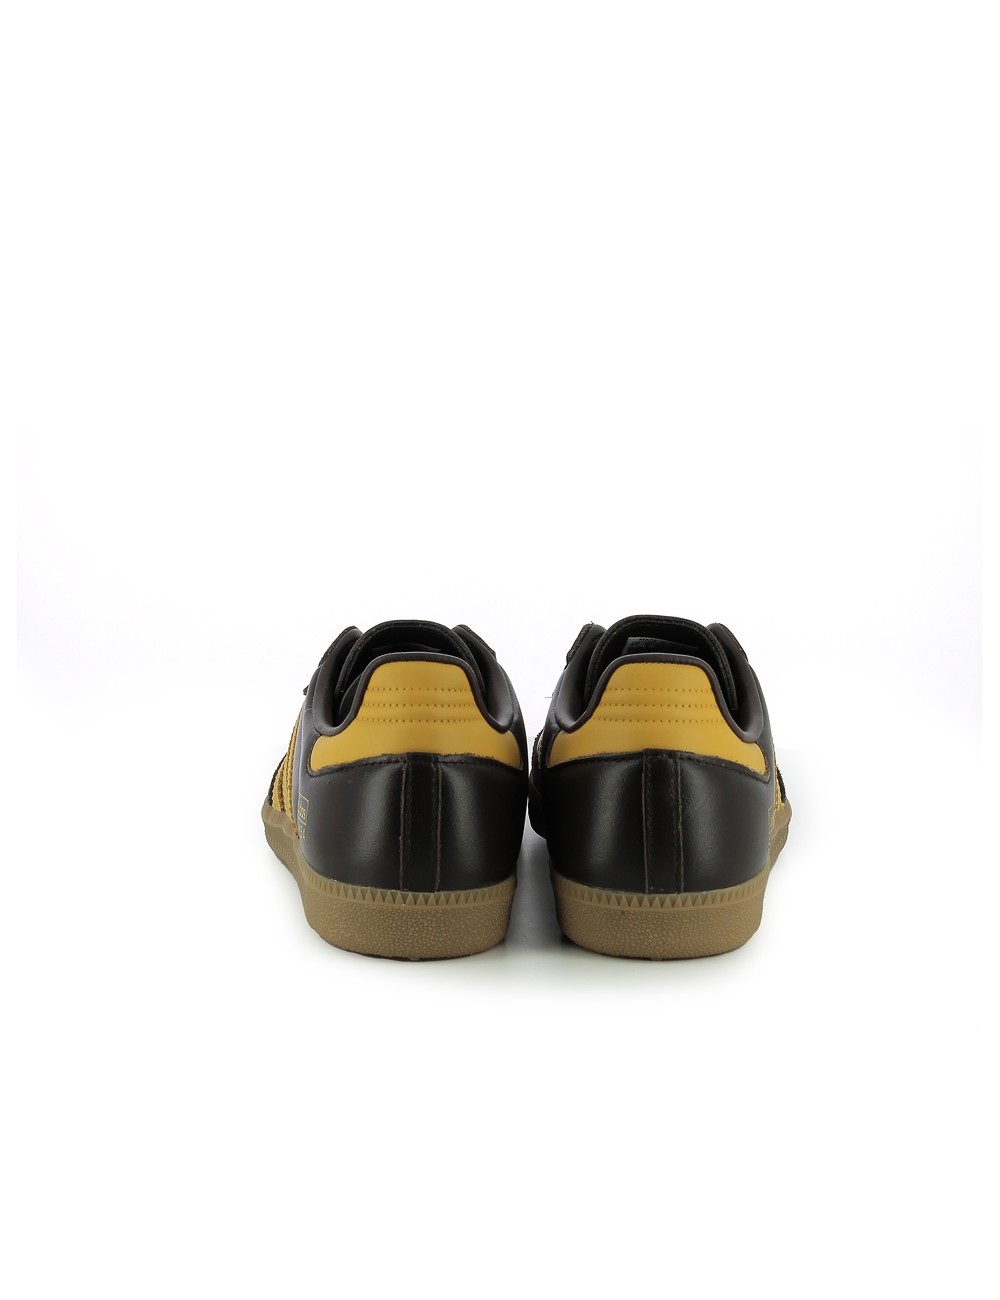 Adidas Samba OG Dark Brown Preloved Yellow Gum IG6174